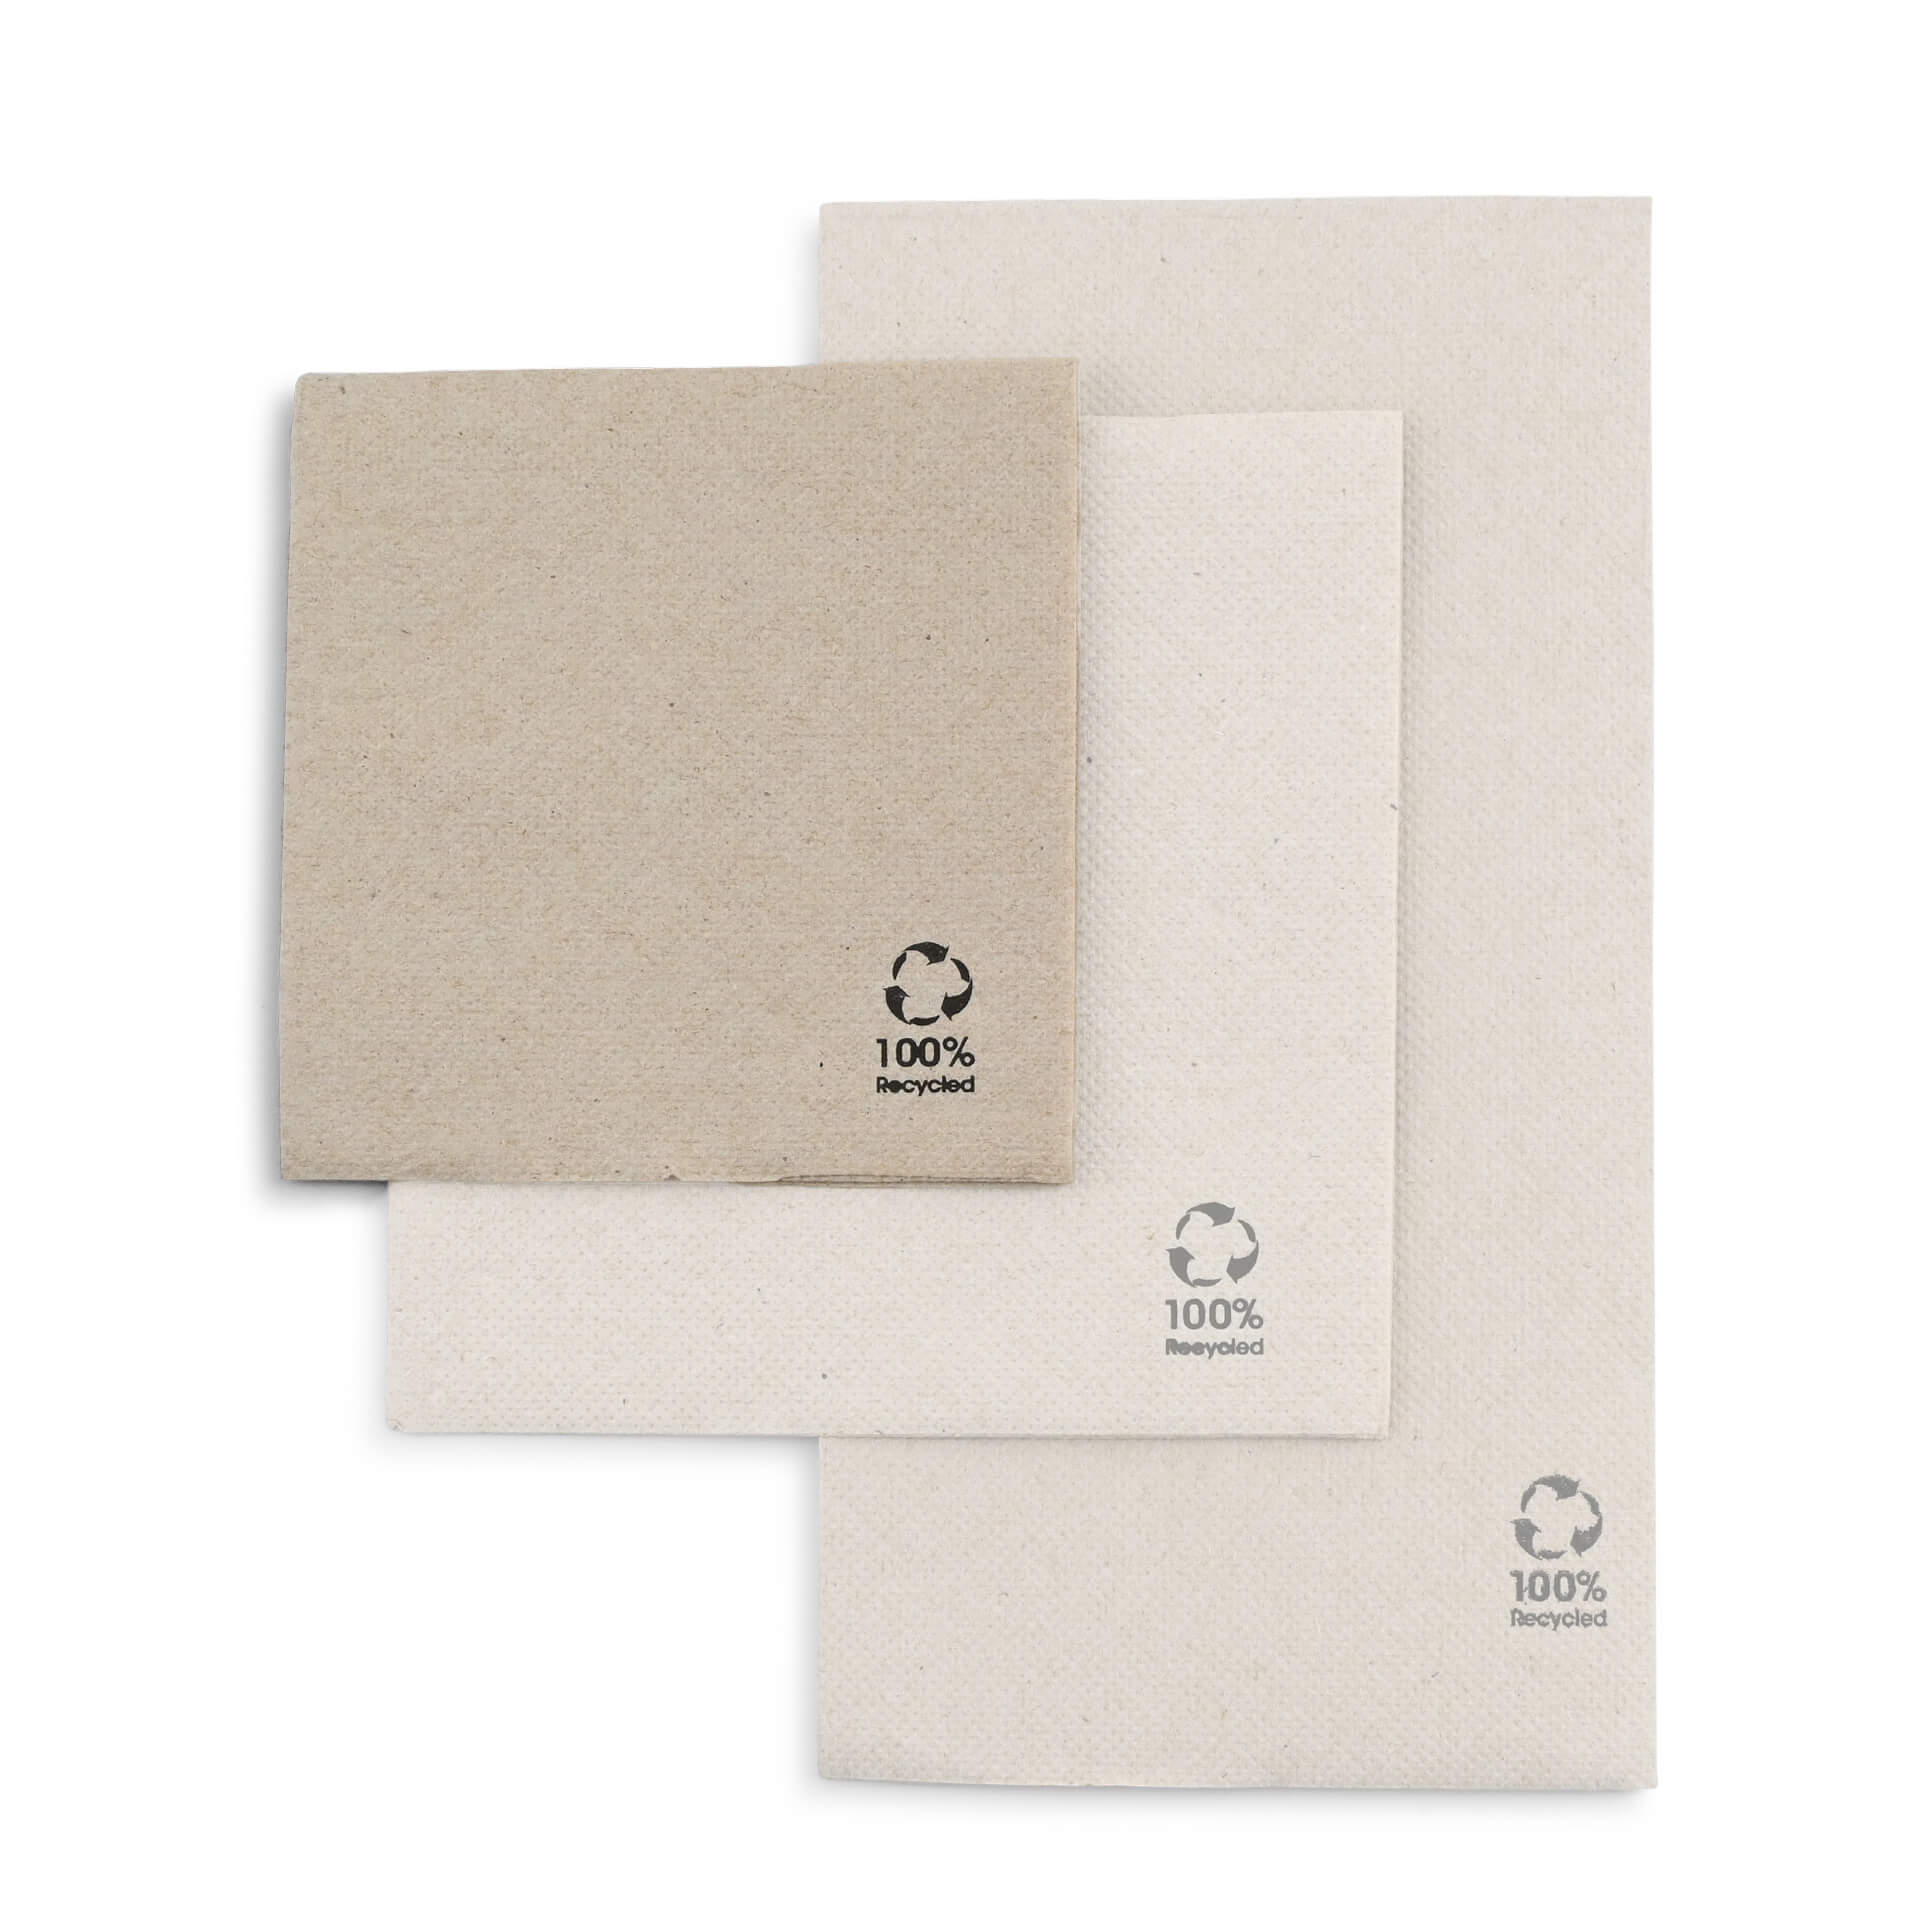 Cocktail-Servietten aus recyceltem Papier (Premium) 20 x 20 cm, 2-lagig, 1/4 Falz, ungebleicht